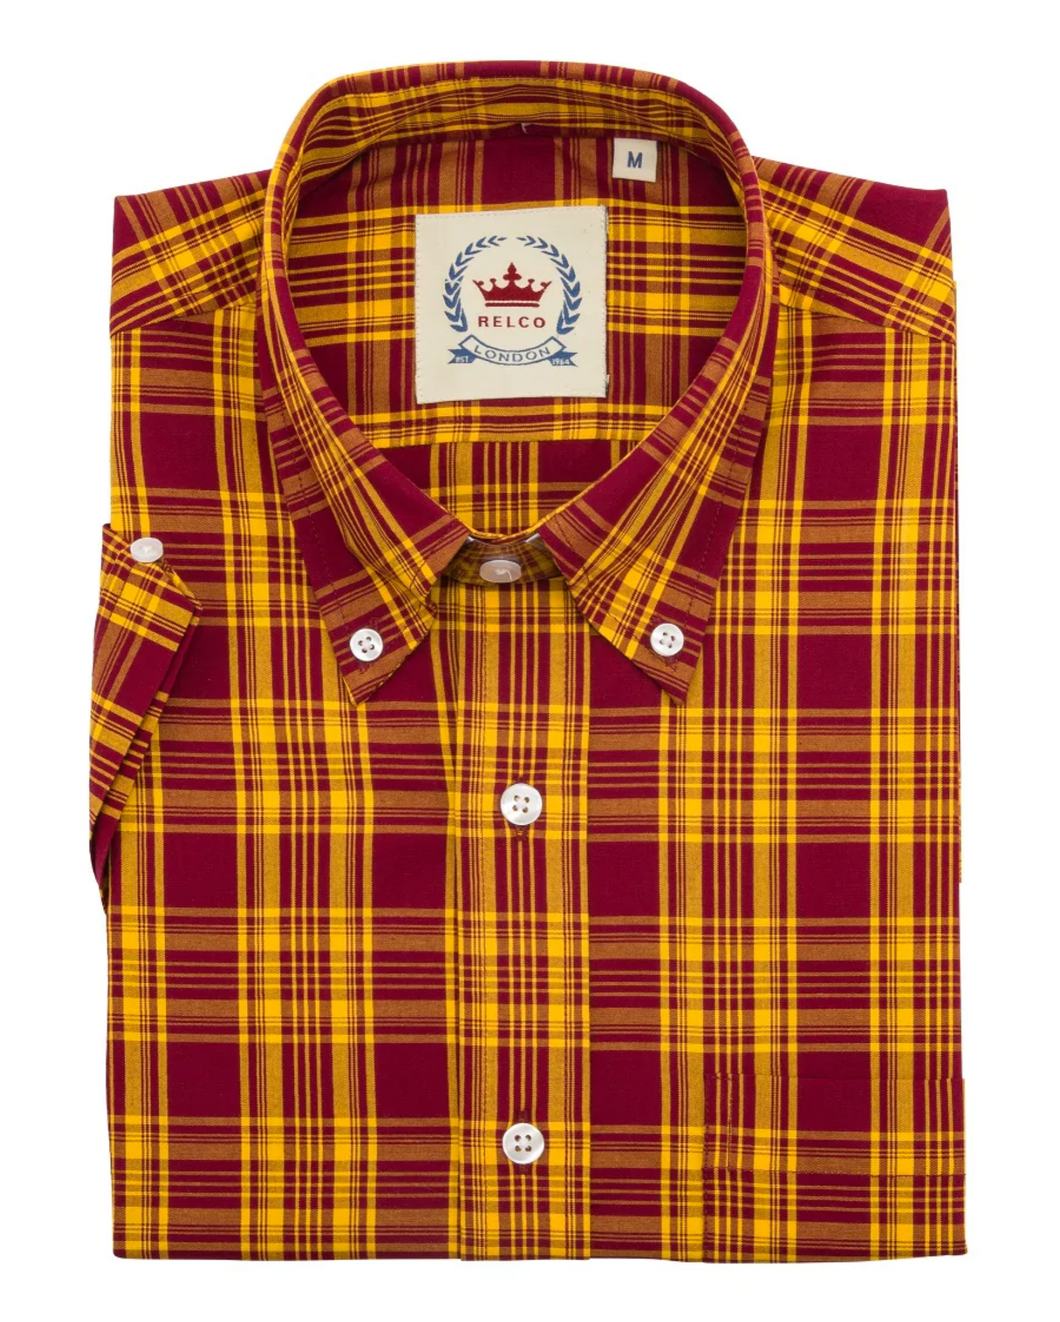 Men's Relco London Short Sleeve Shirt • Mustard & Burgundy Checked